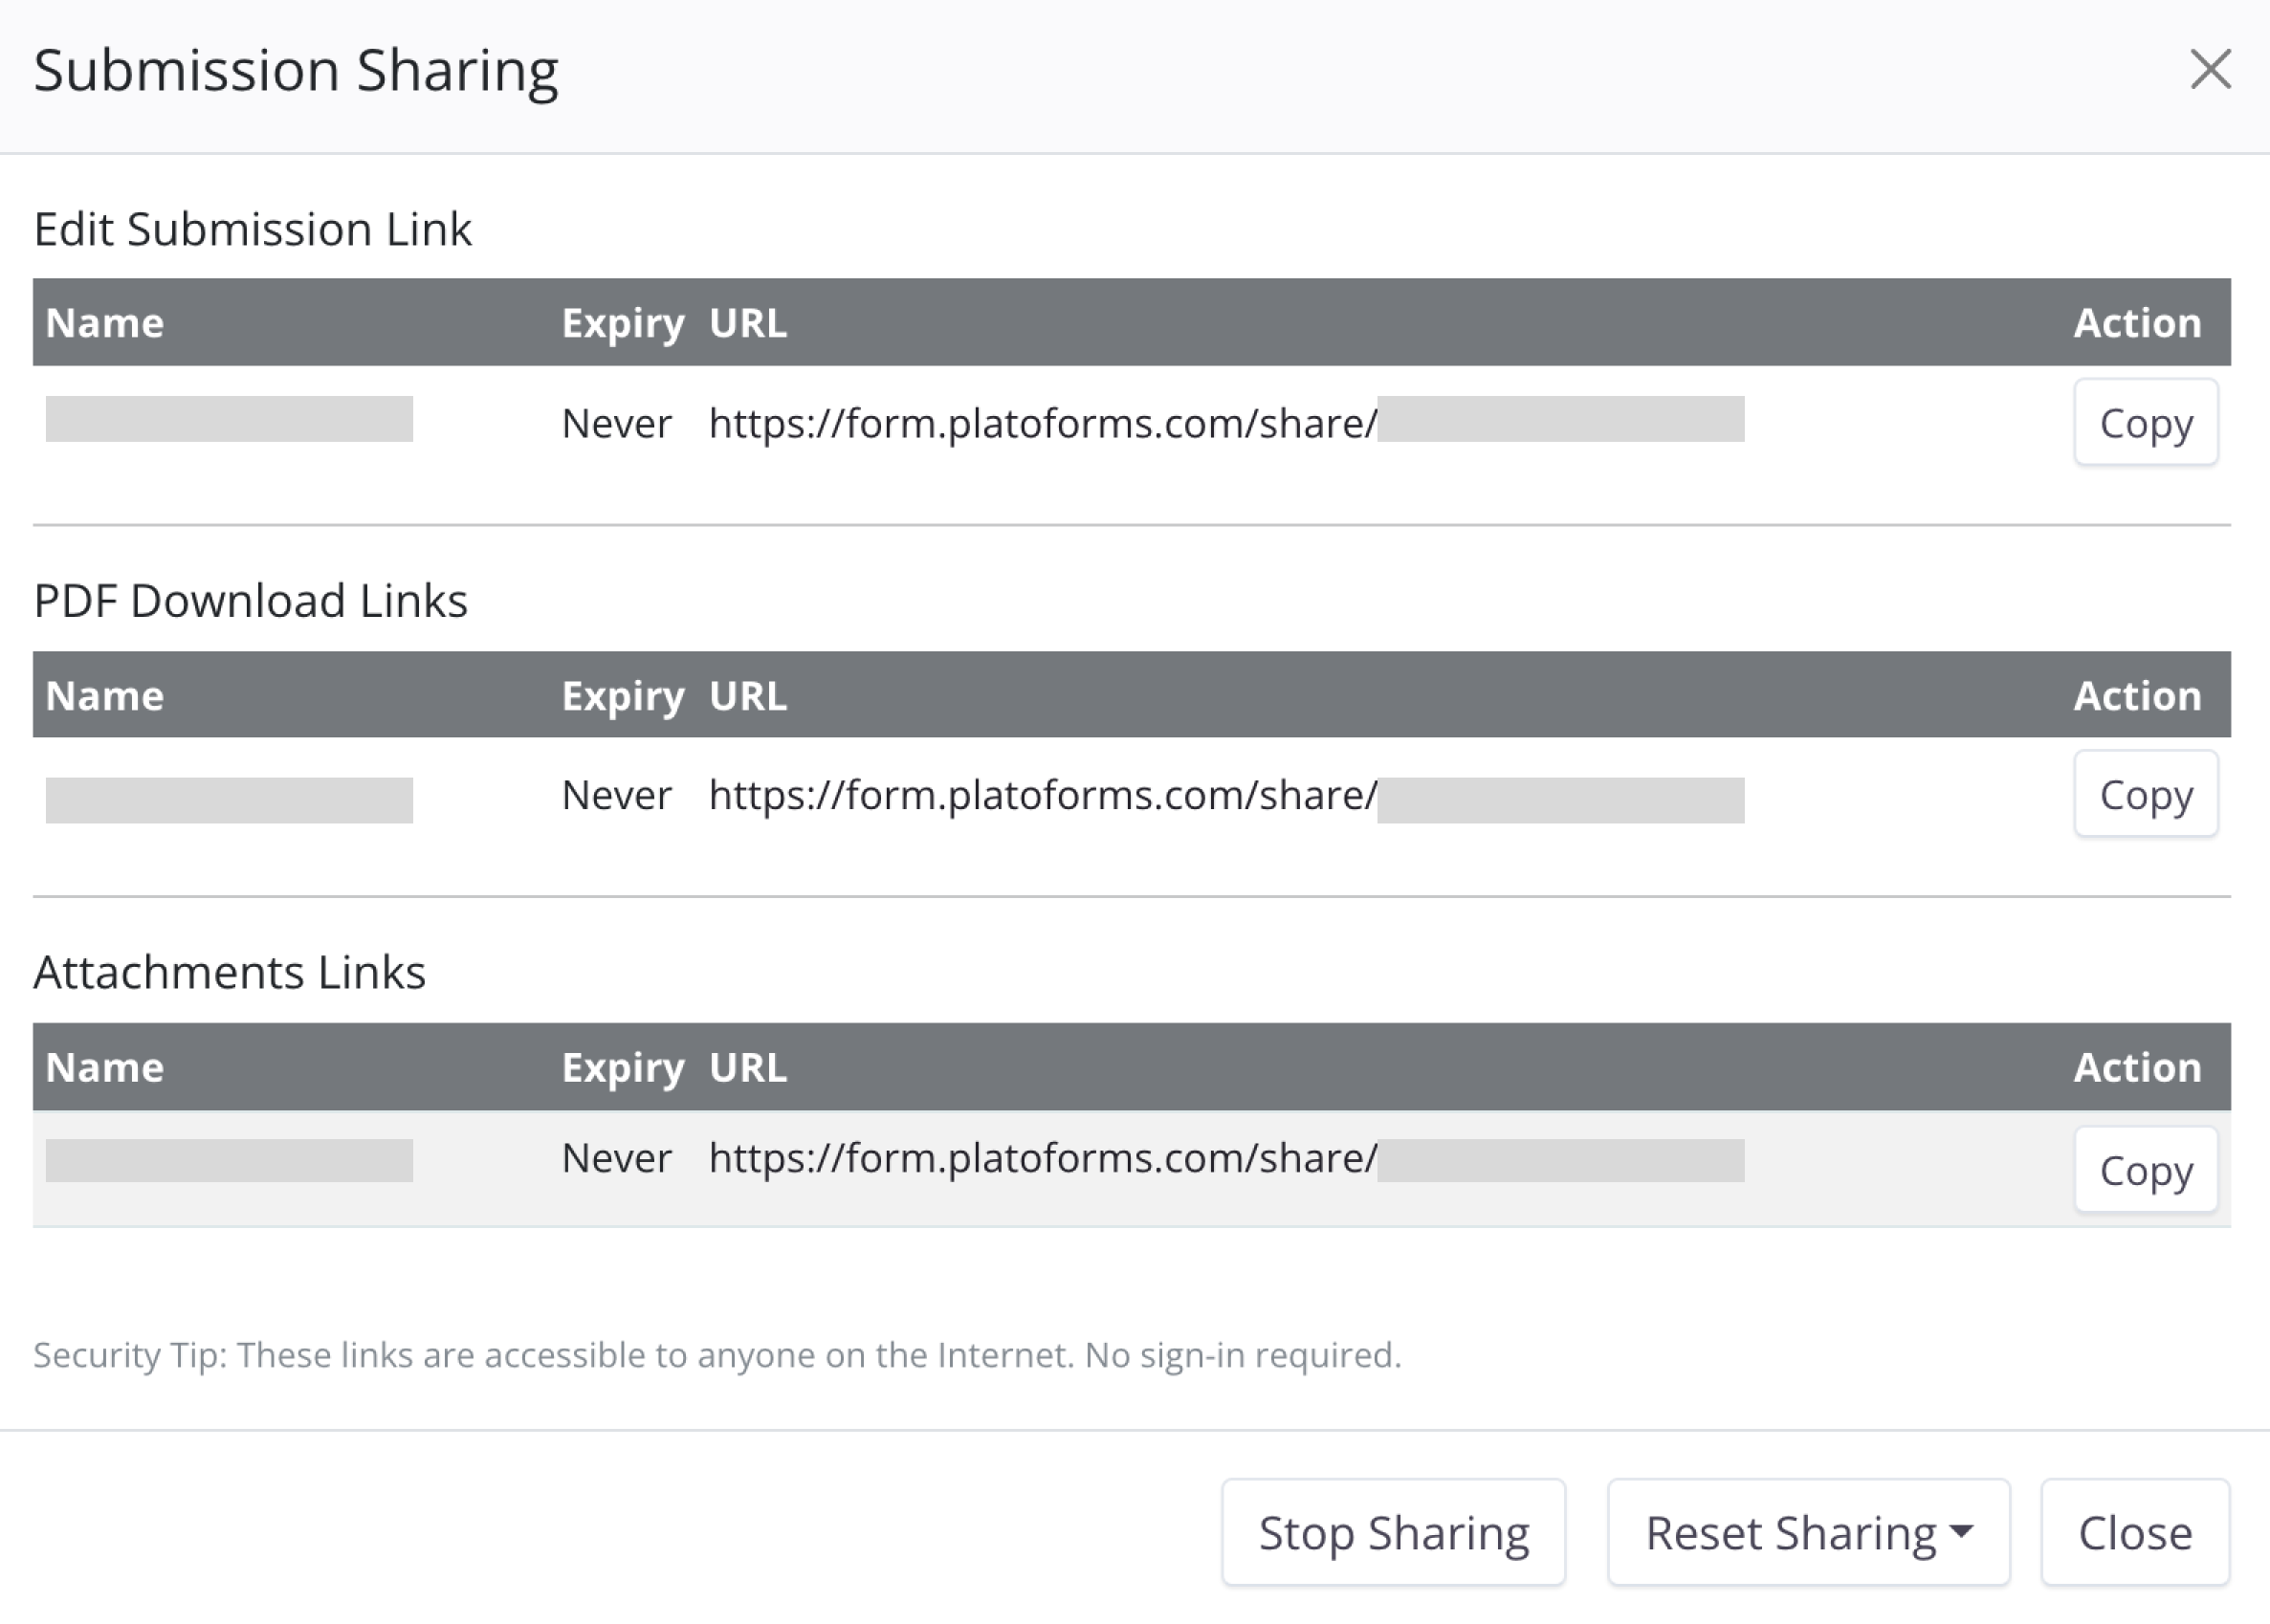 Manage sharing links